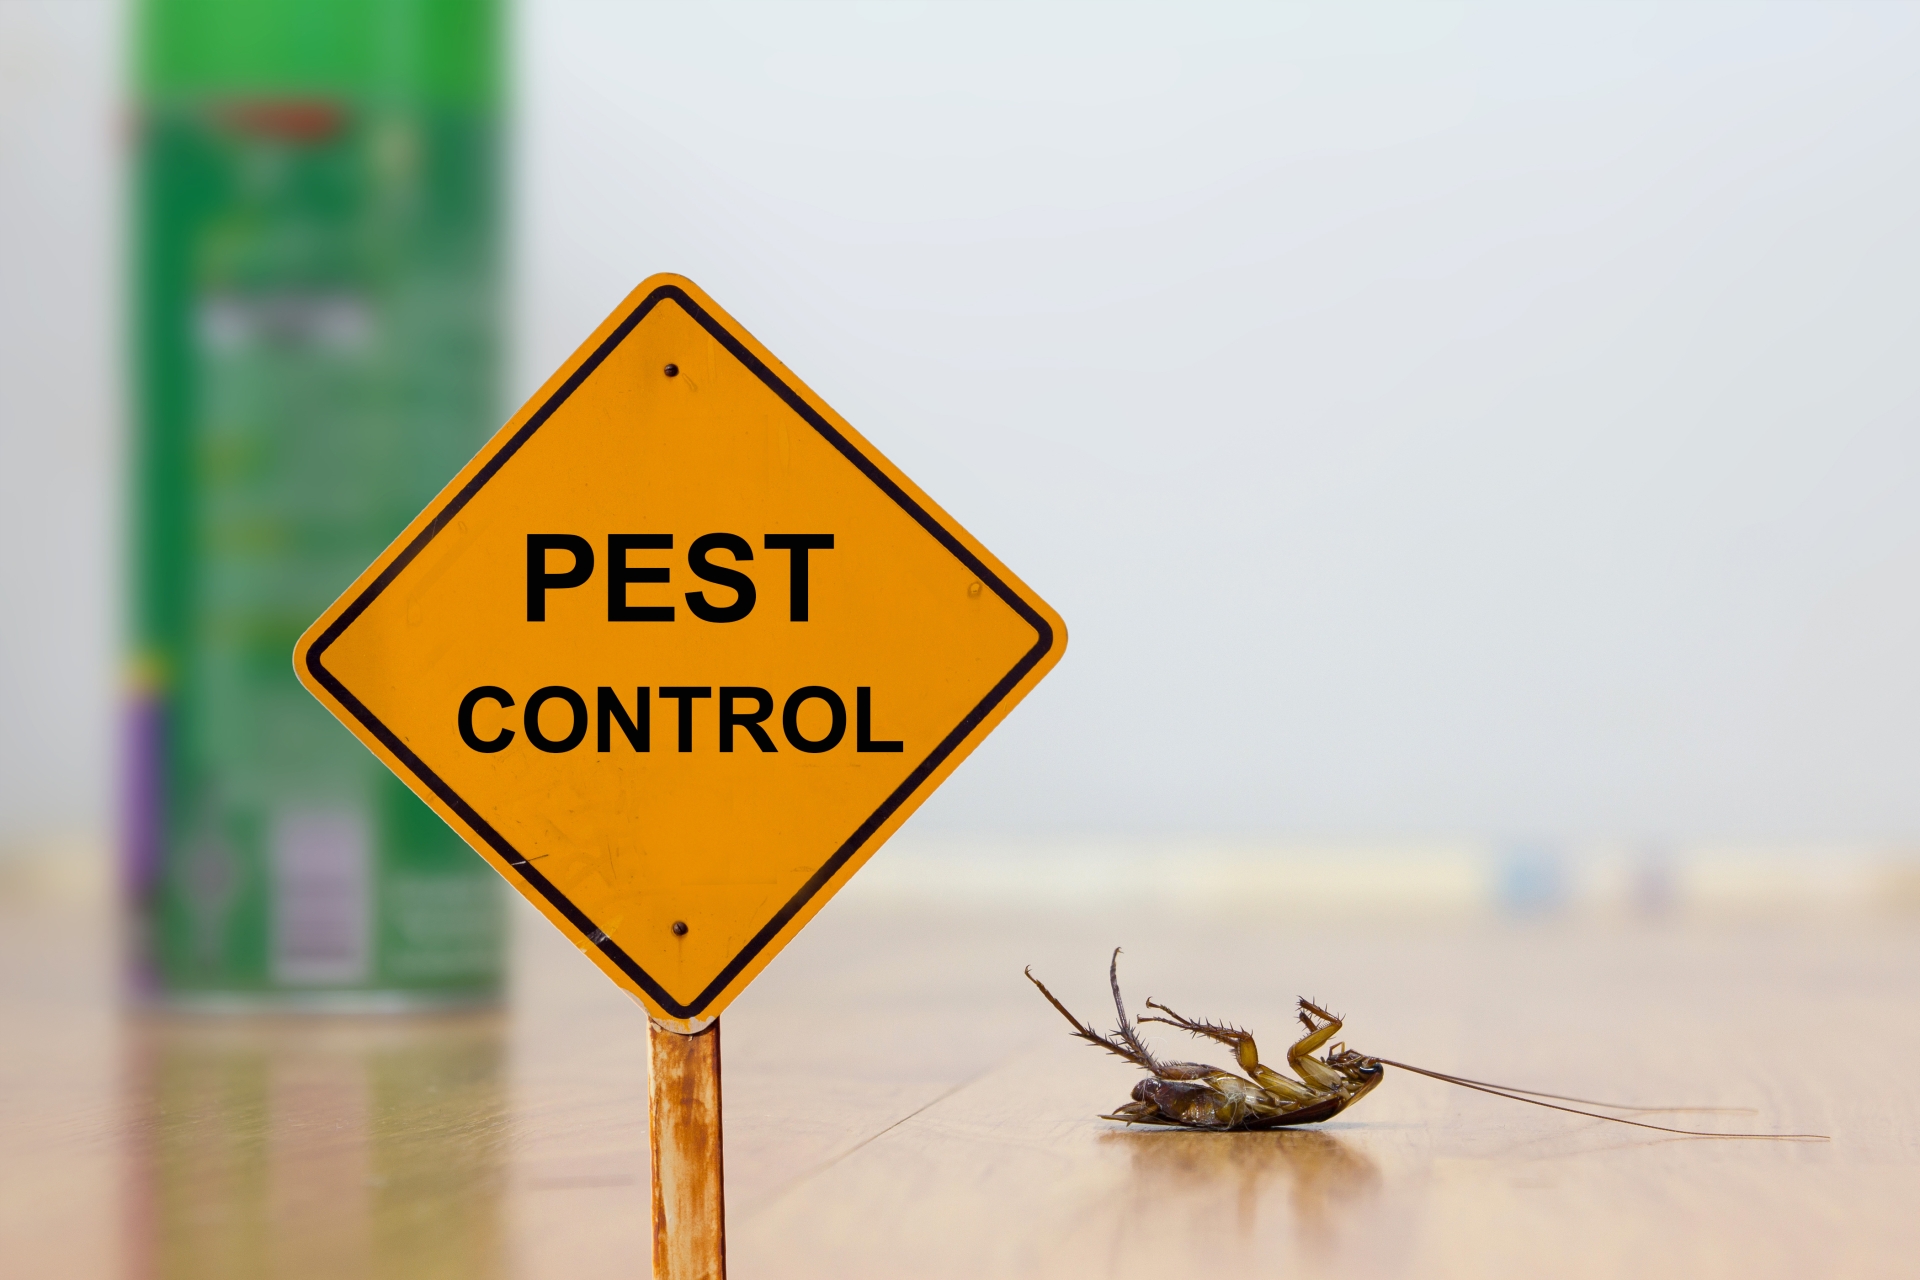 24 Hour Pest Control, Pest Control in Chislehurst, Elmstead, BR7. Call Now 020 8166 9746